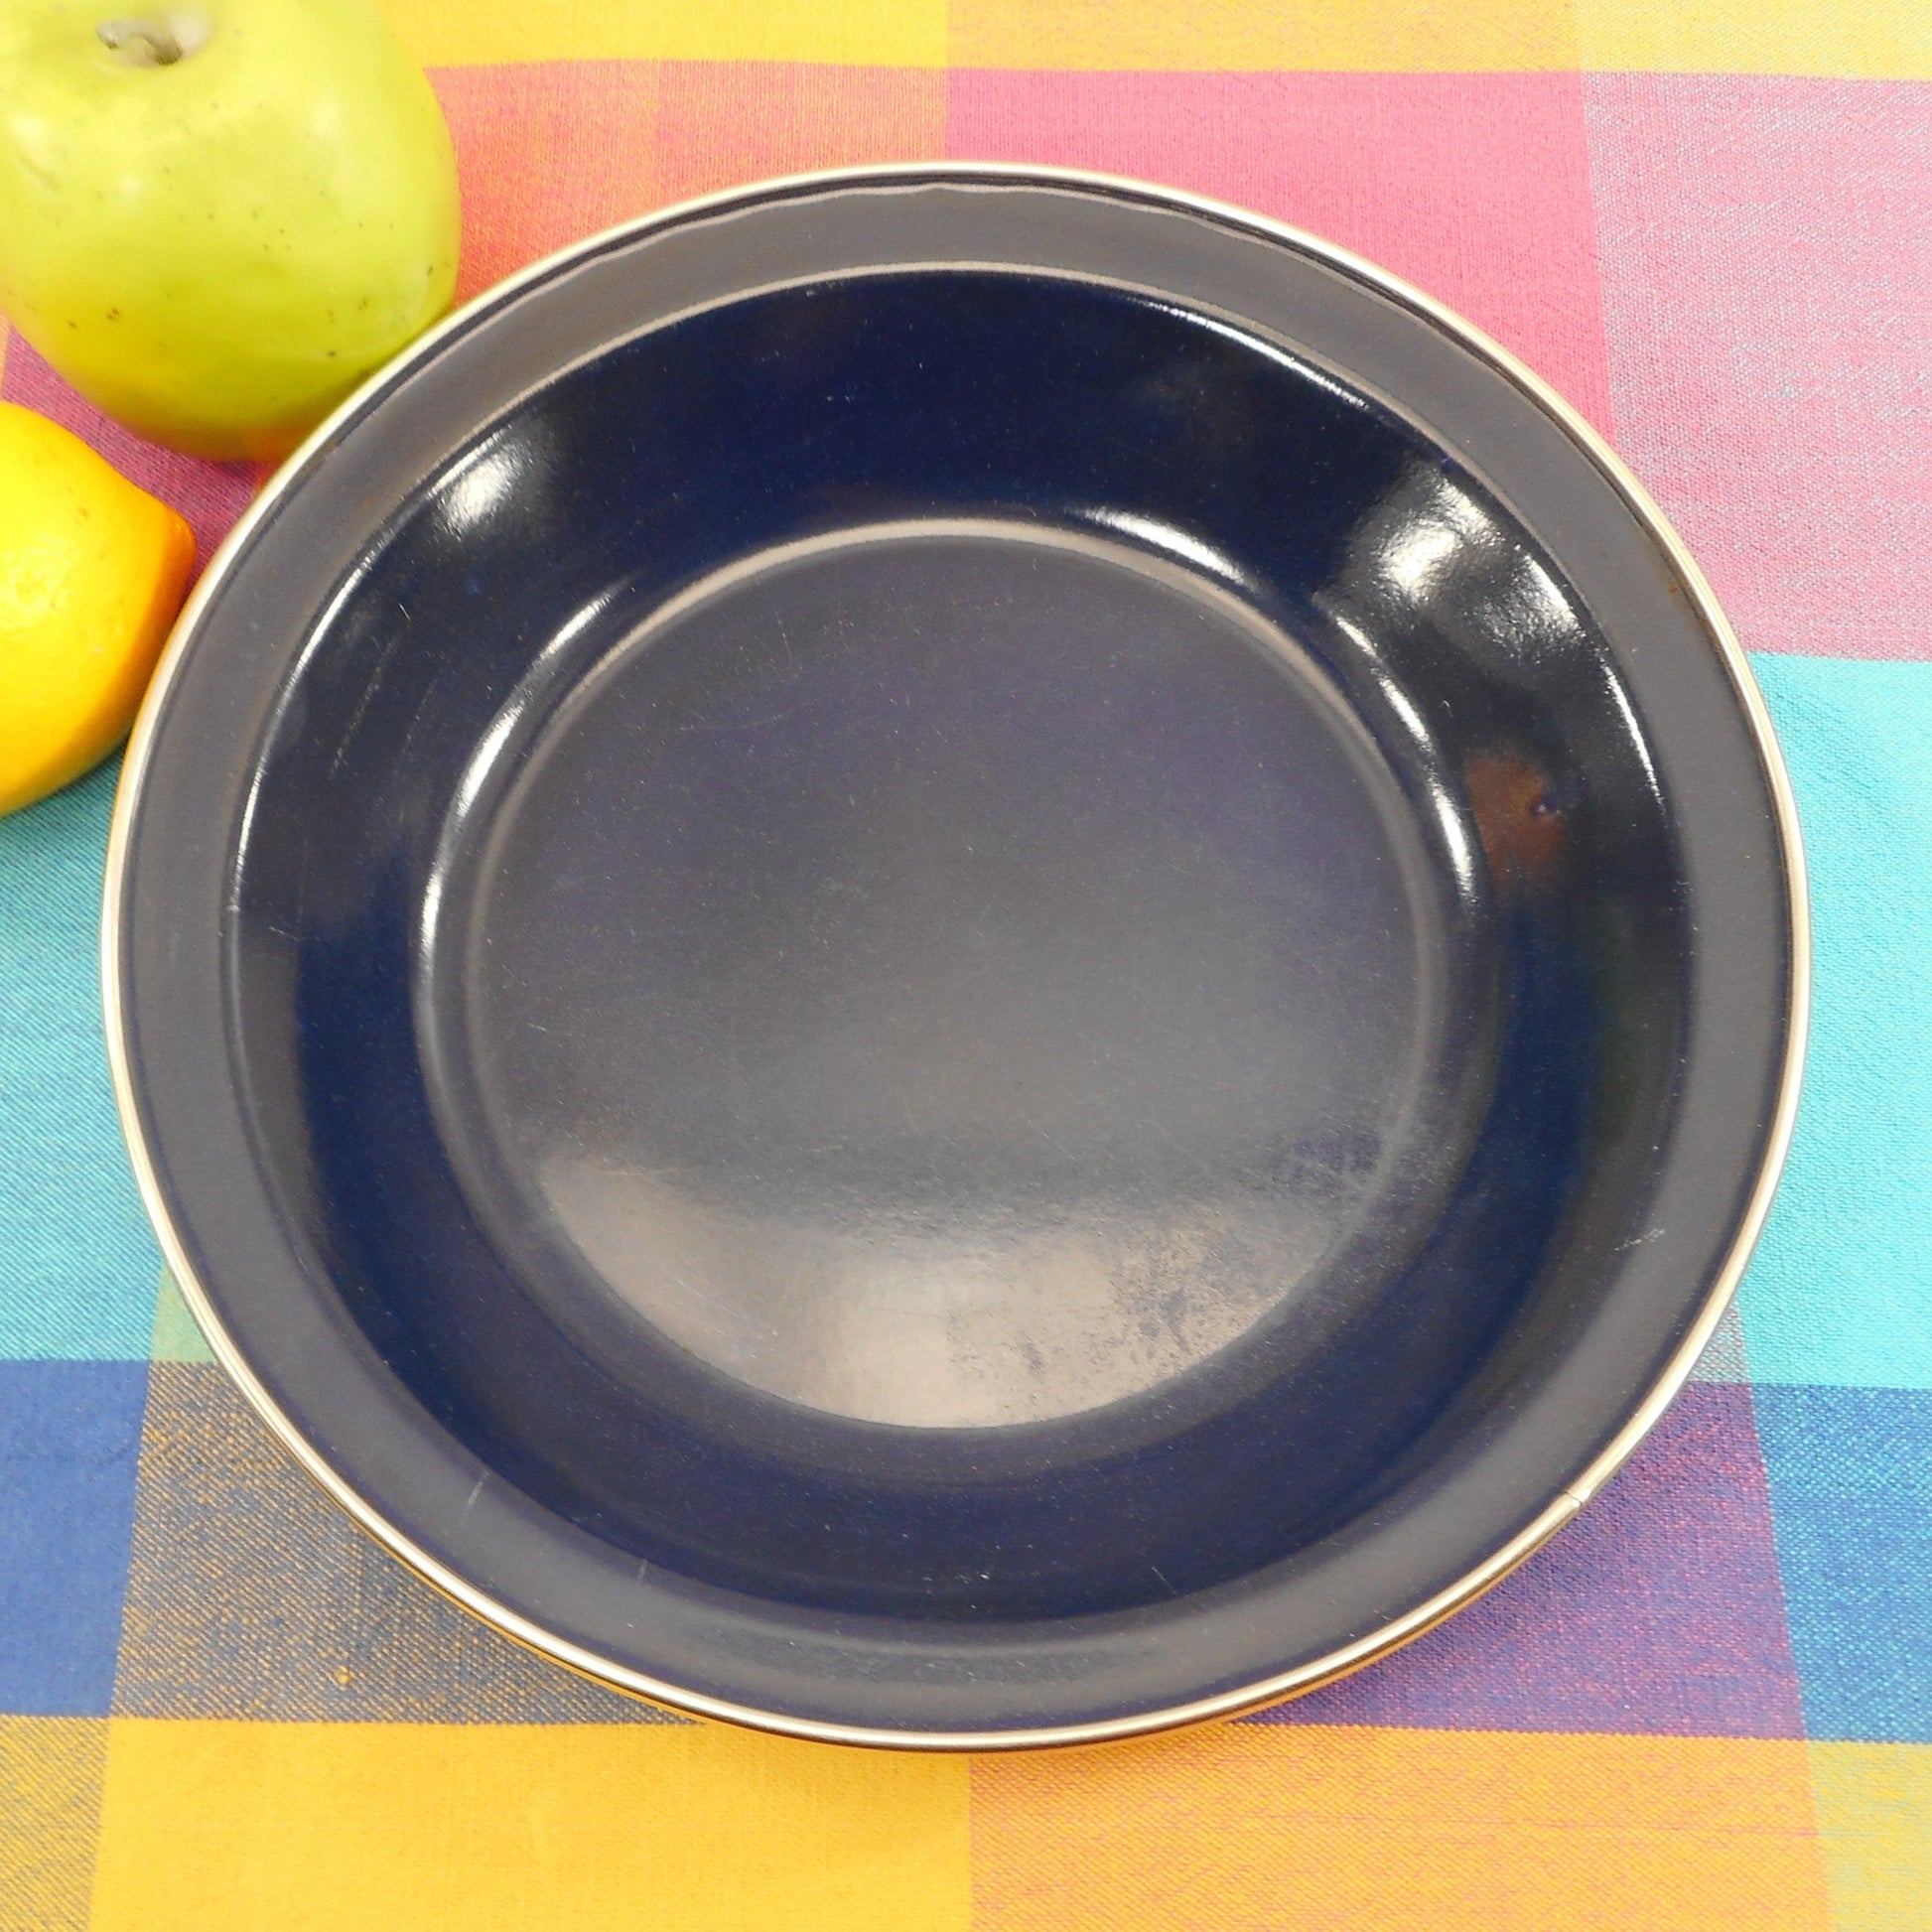 Unbranded Blue Enamelware 10" Pie Plate Pan Dish - Stainless Rim